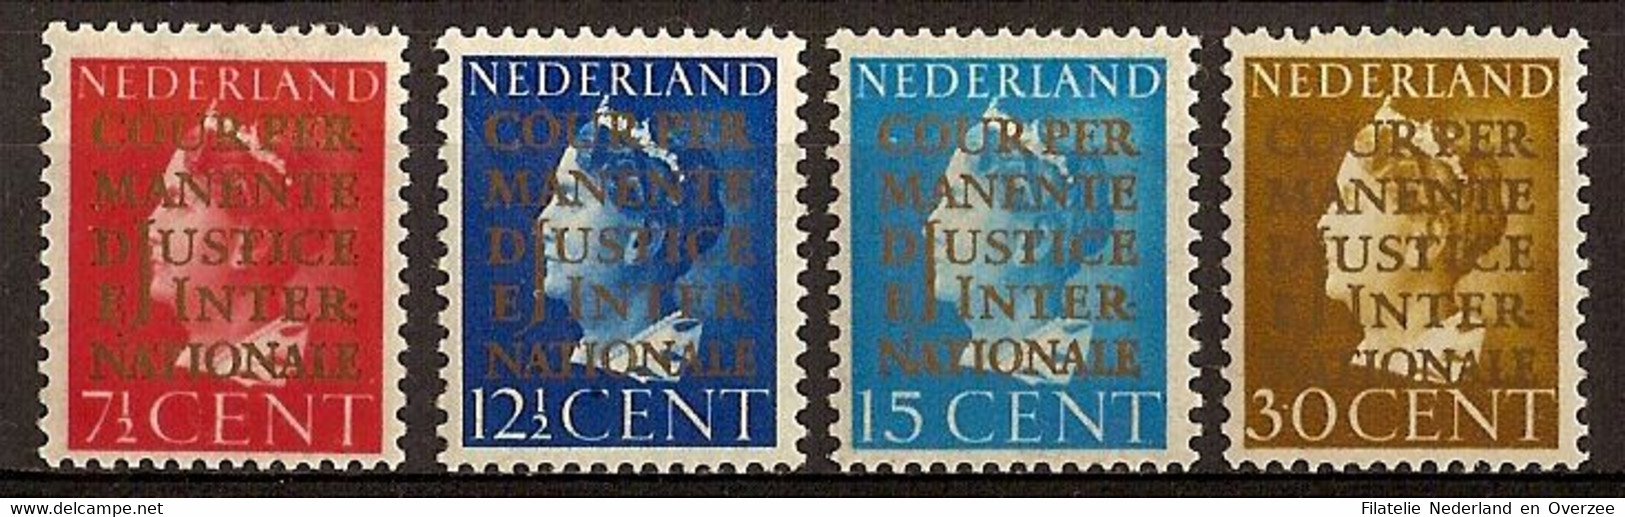 Nederland 1940 Dienst 16/19 Ongebruikt/MH  Cour Permanente De Justice, Service Stamps. - Servicios